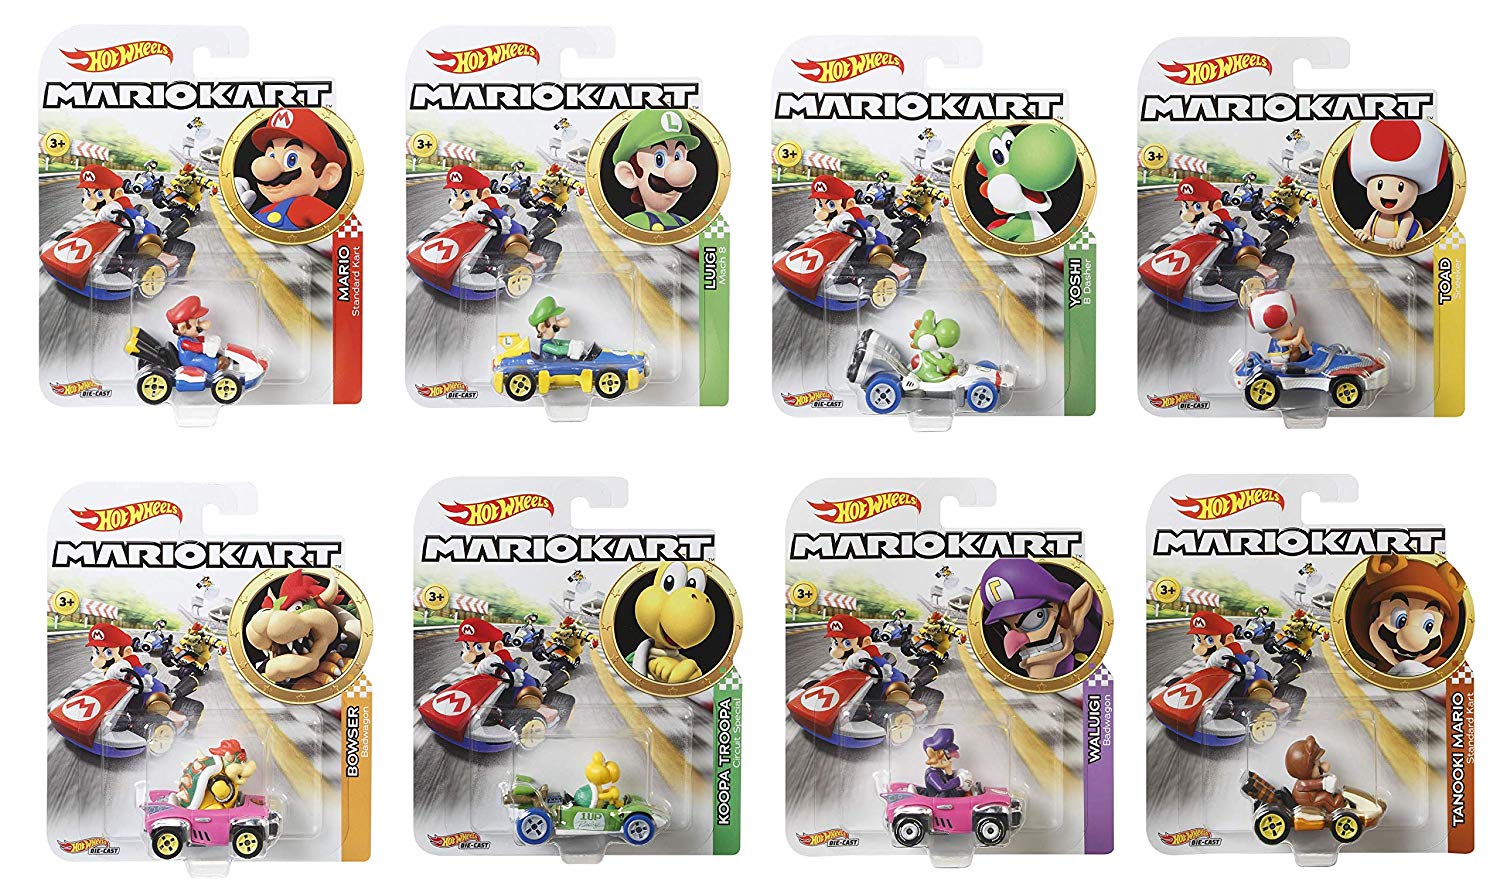 Hot Wheels X Mario Kart 2020 Toys Up For Pre-Order – NintendoSoup